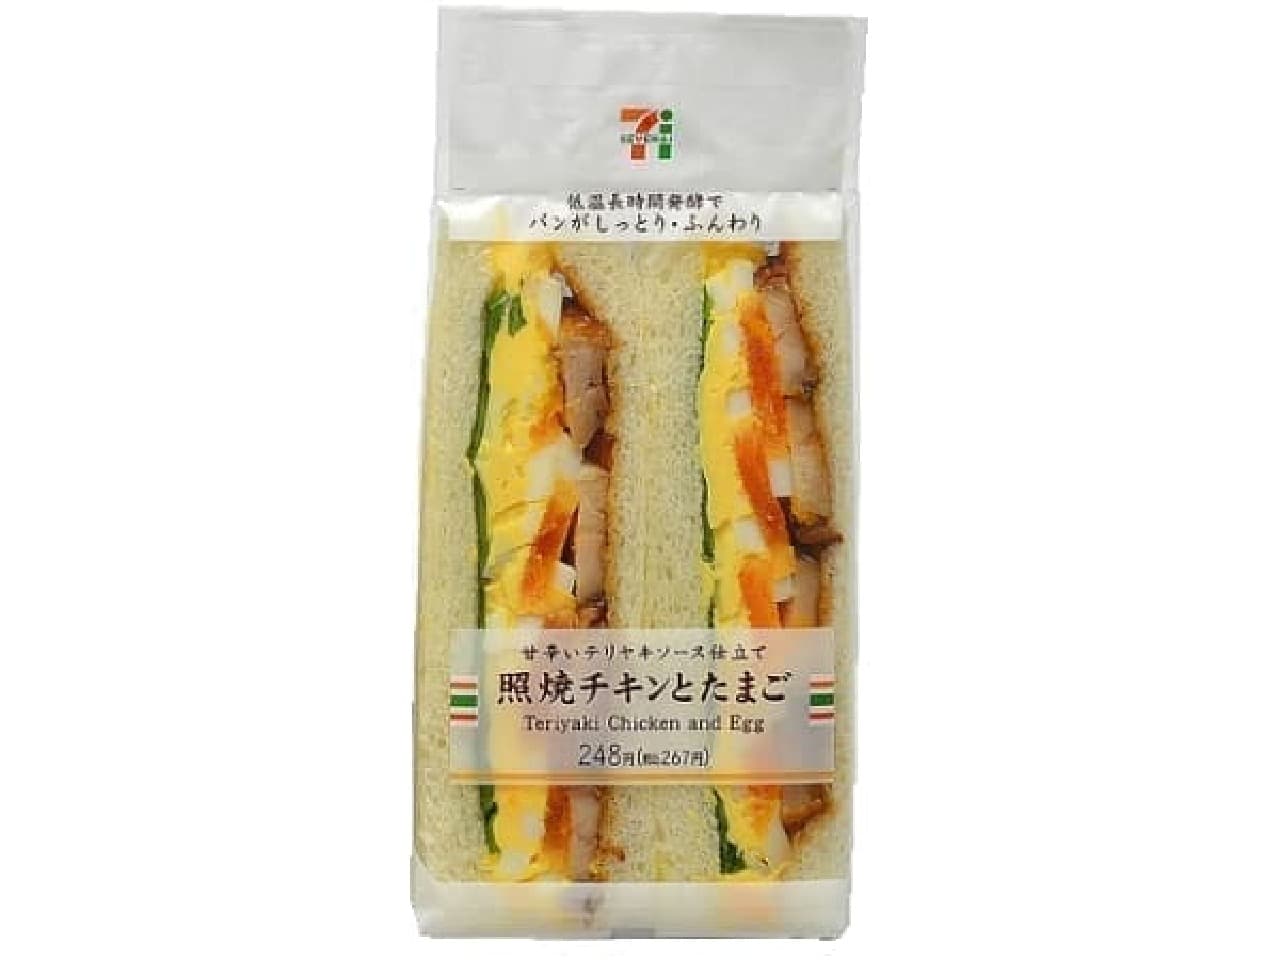 7-ELEVEN "Teriyaki Chicken and Egg Sandwich"